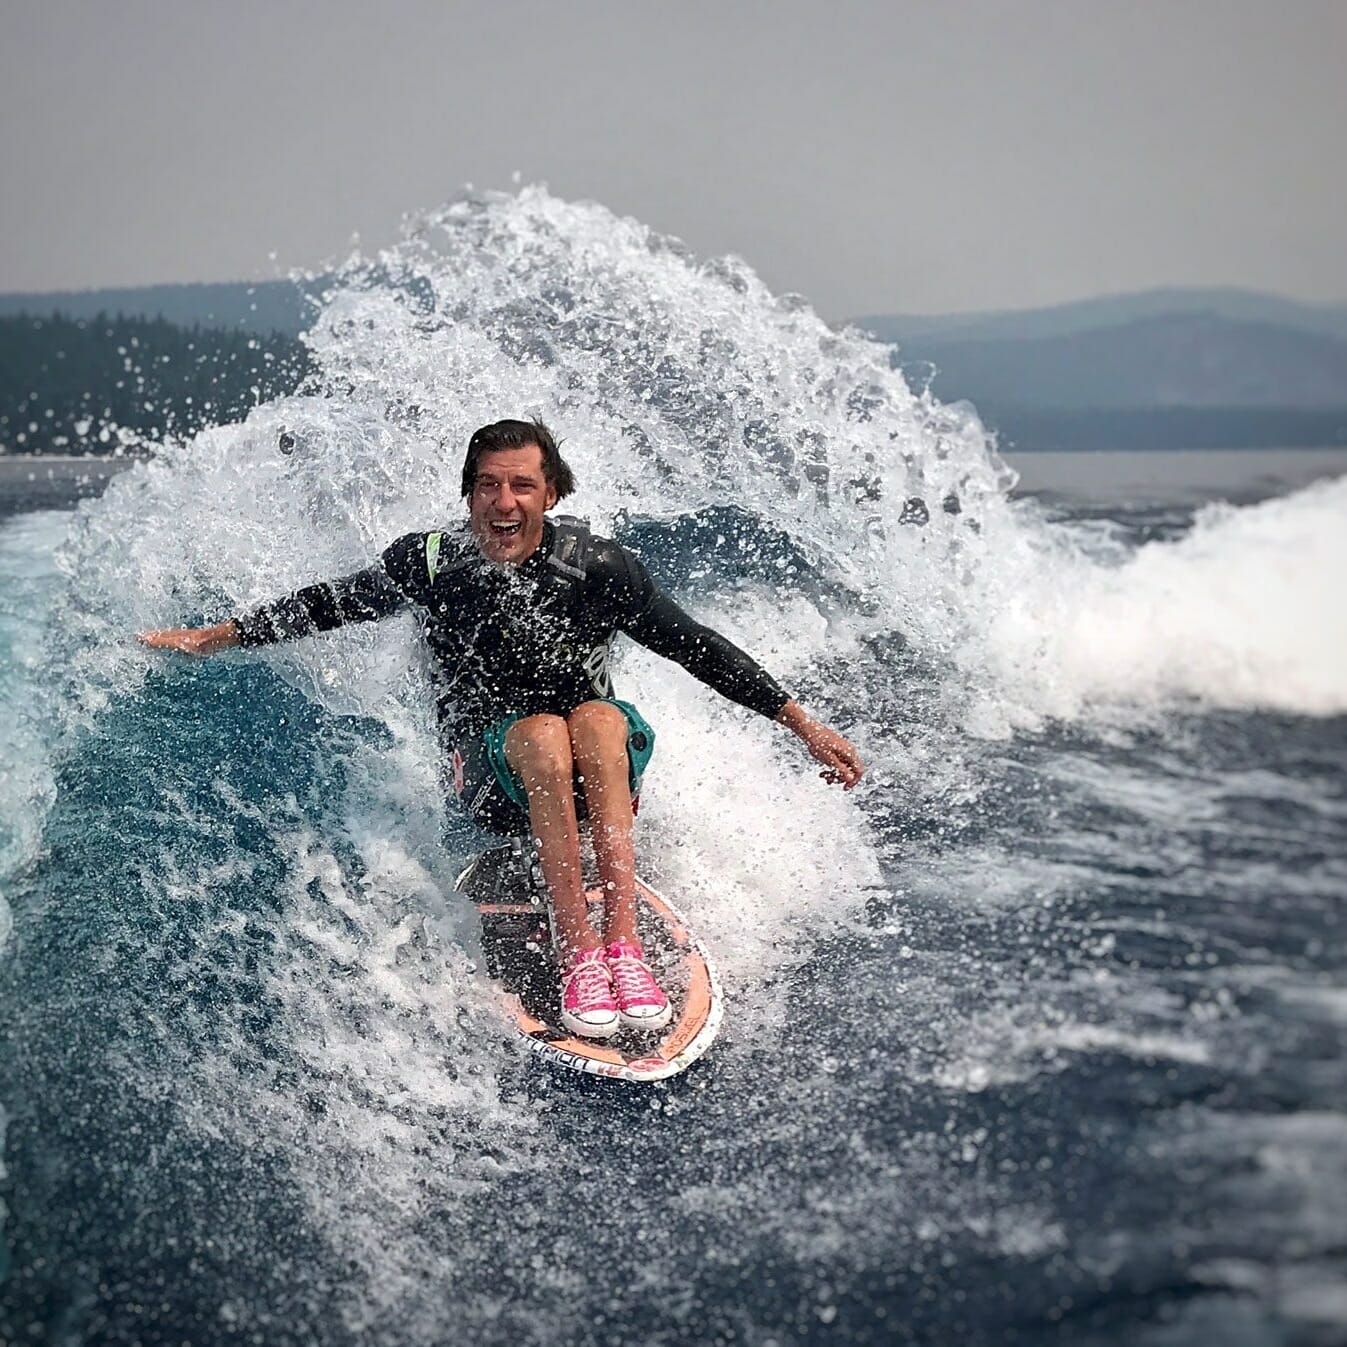 Grant Korgan wake surfing